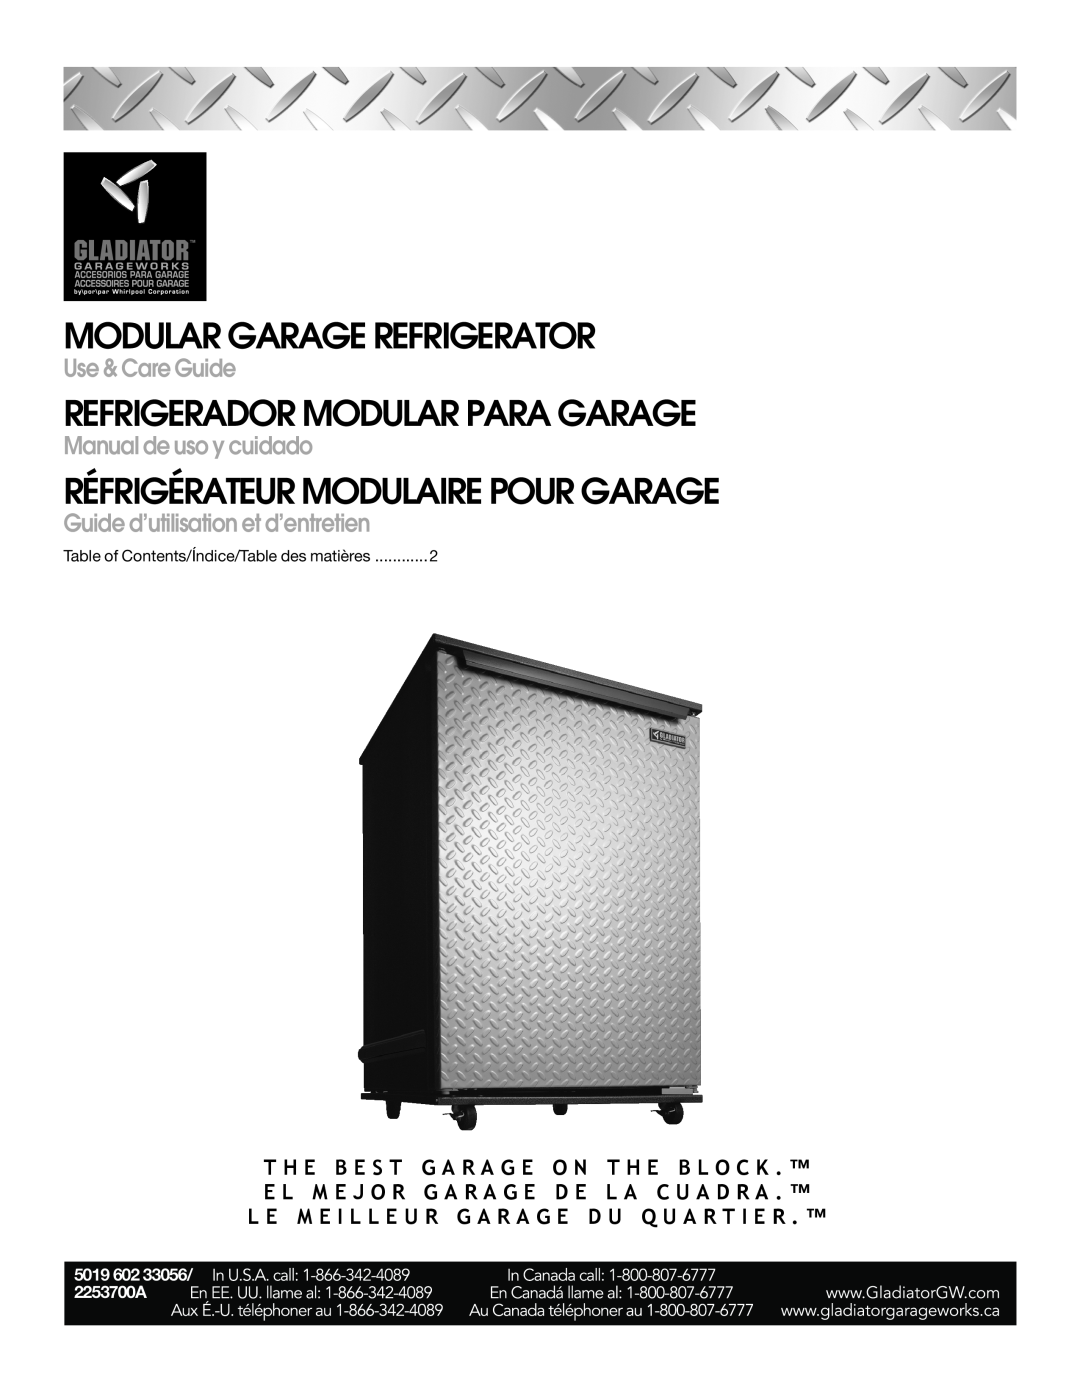 Whirlpool GARF06XXMG00 manual Modular Garage Refrigerator, Refrigerador Modular Para Garage, Use & Care Guide 